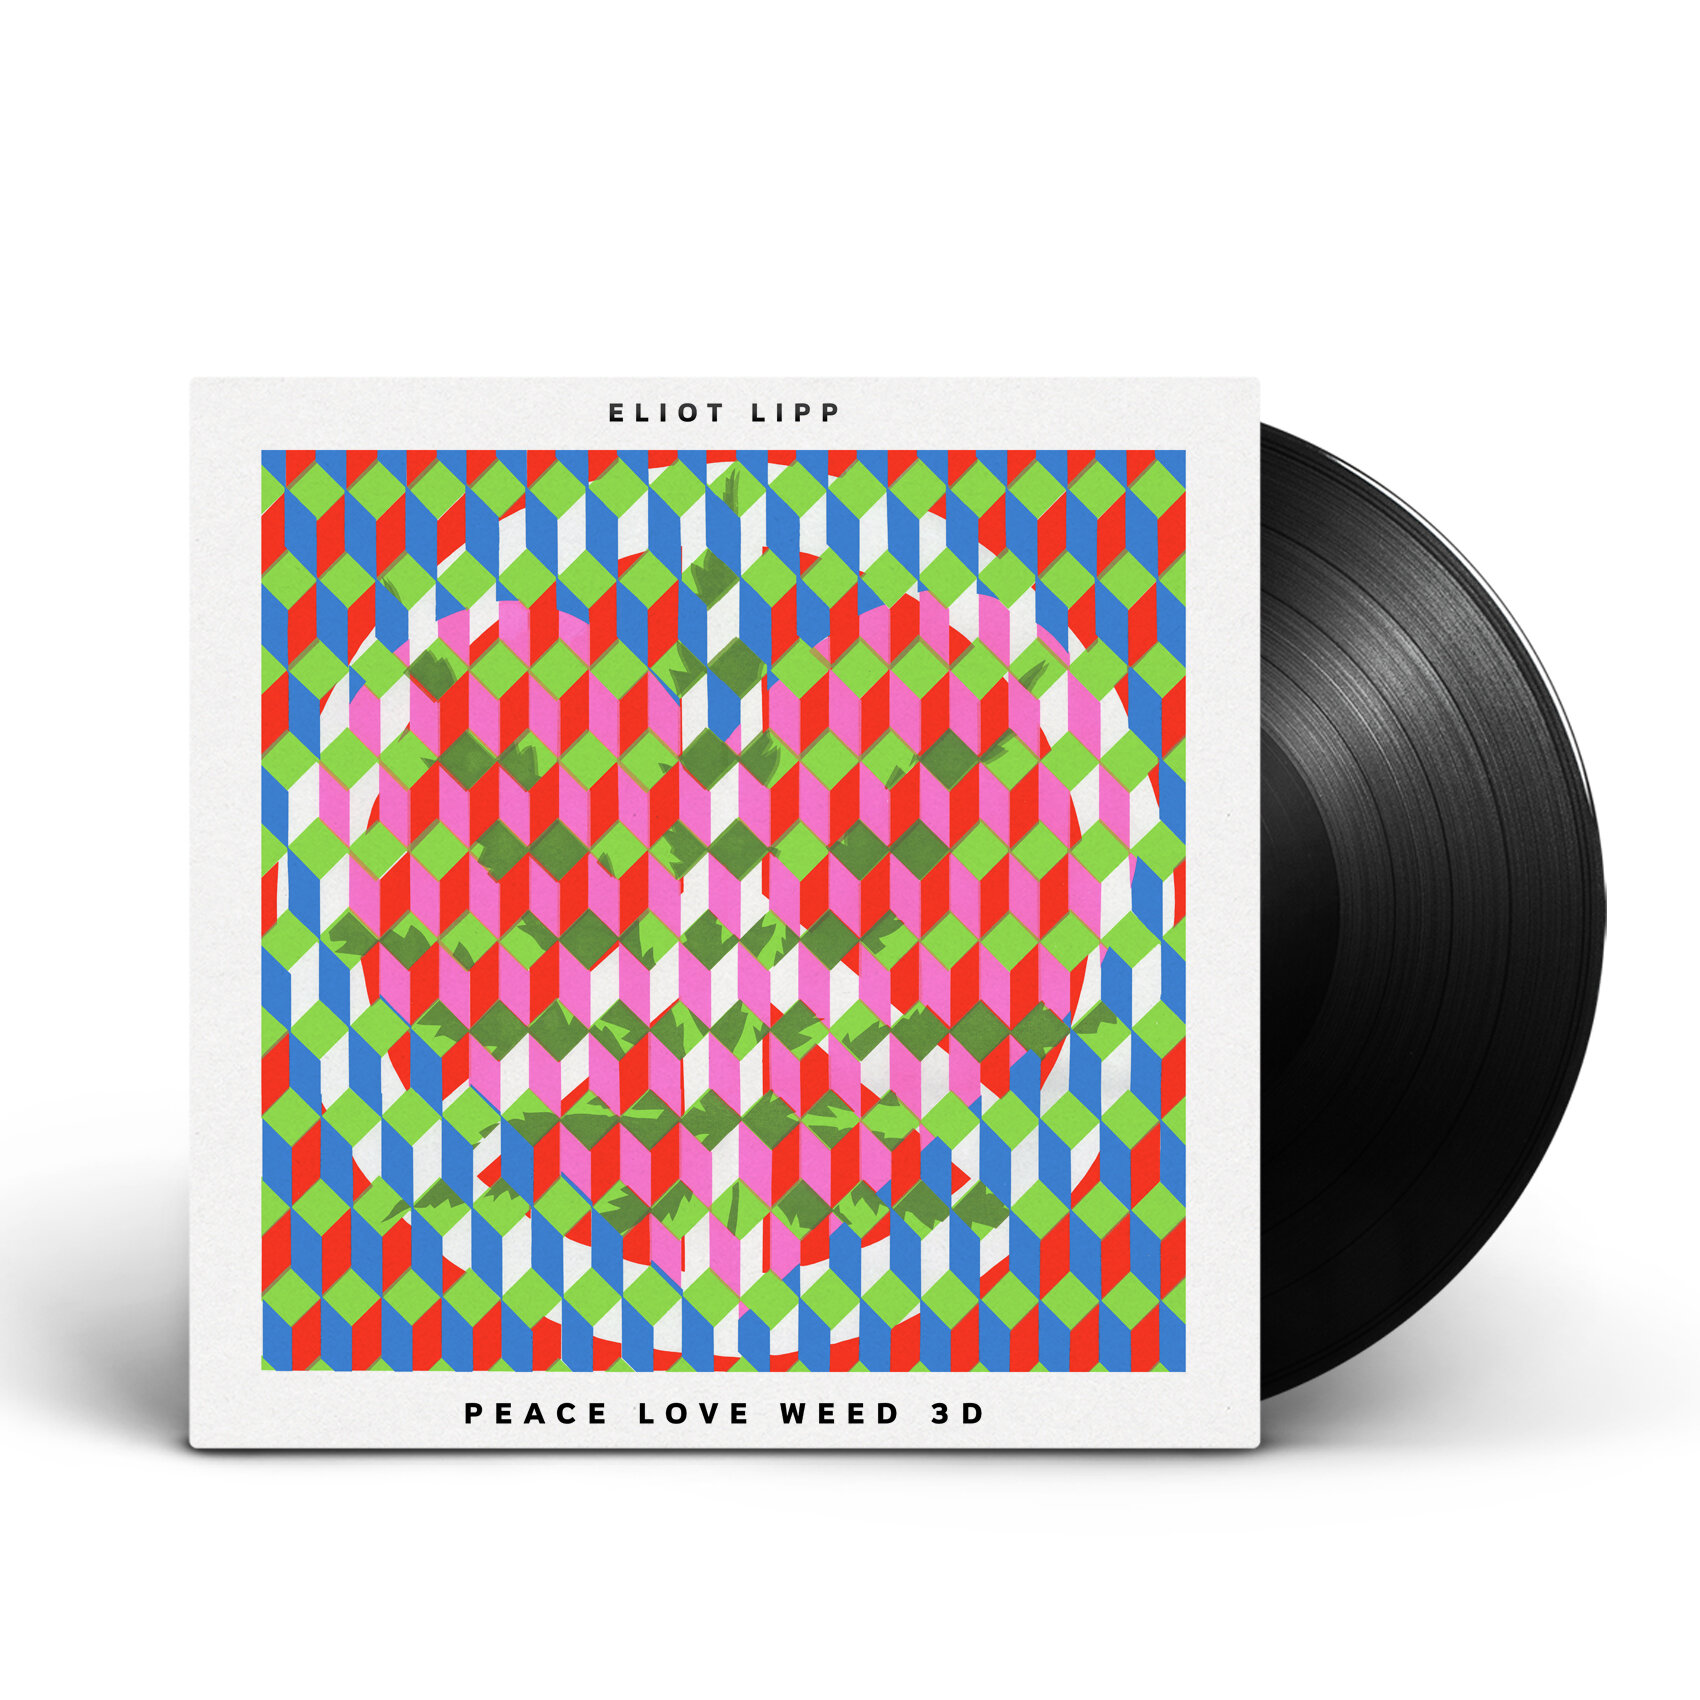 Eliot Lipp - Peace Love Weed 3D (LP) – $20.00